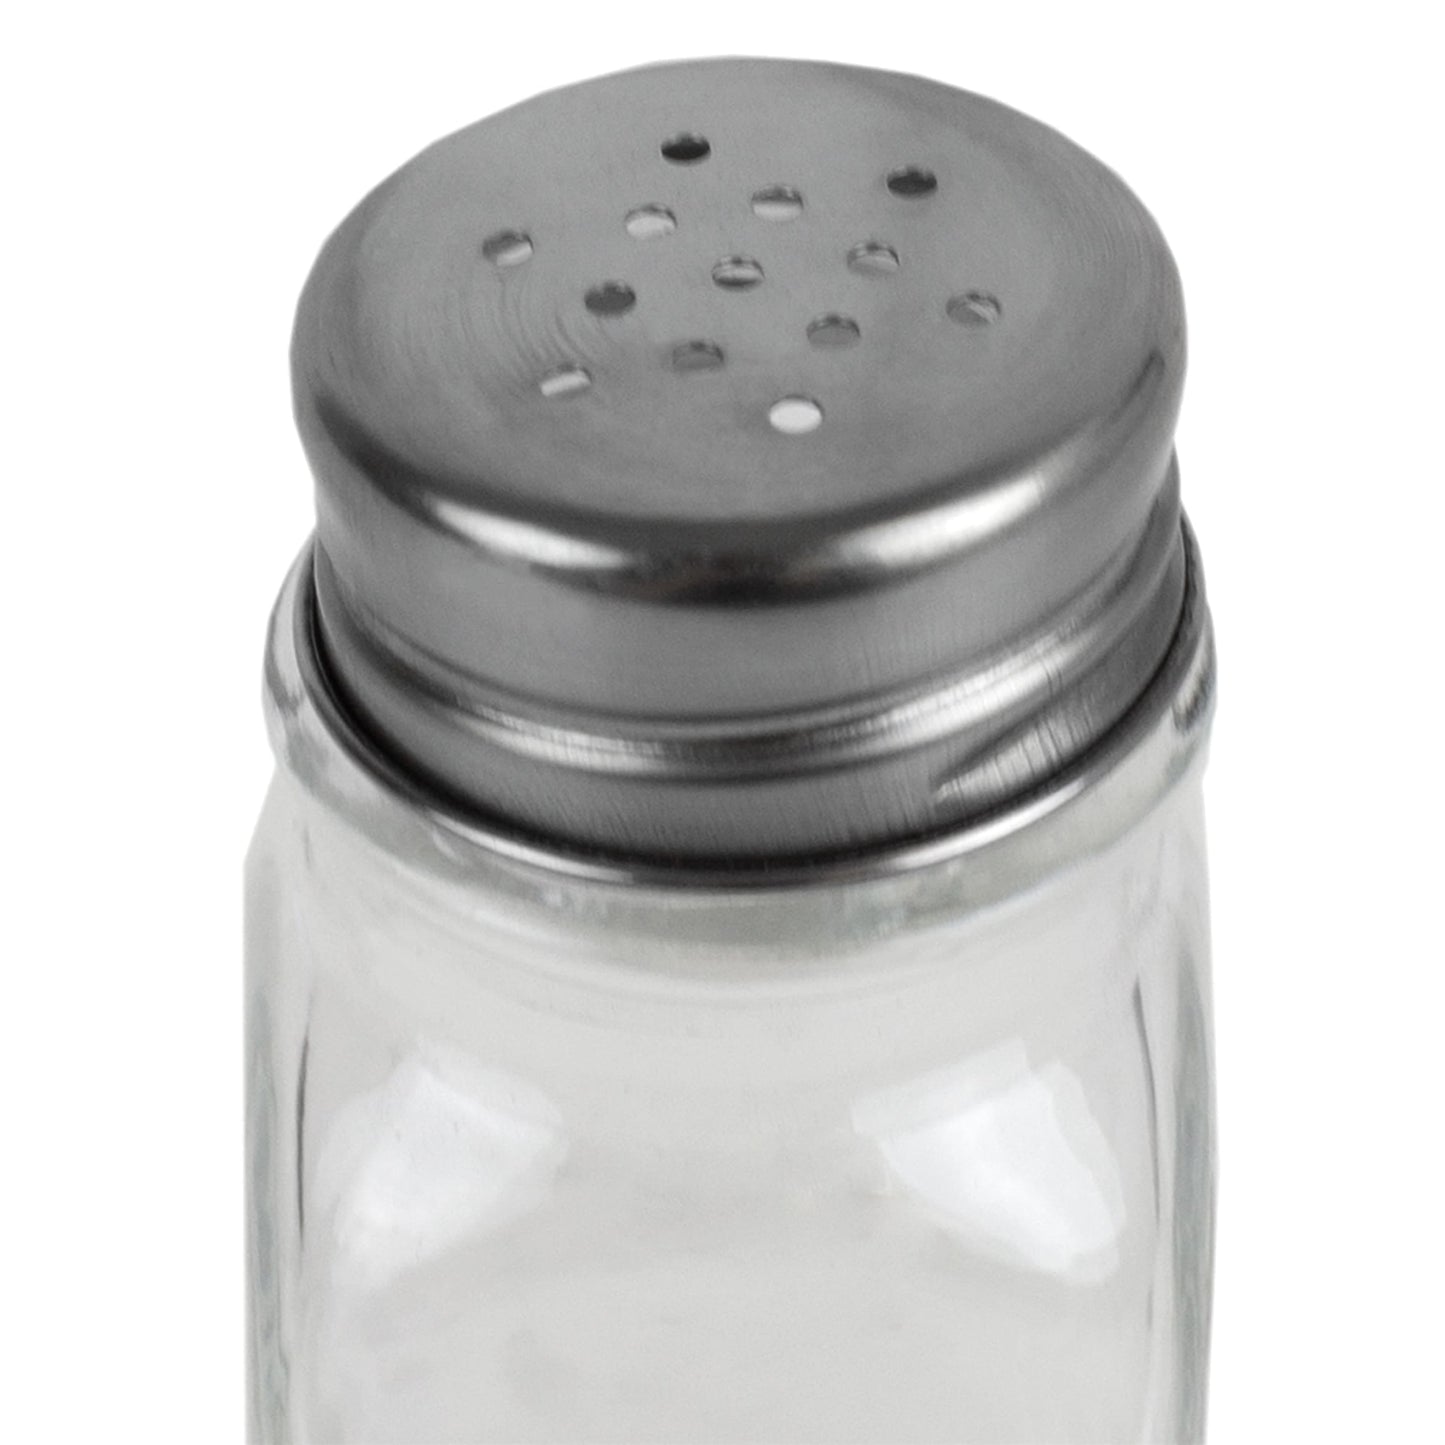 2 oz. Salt and Pepper Shaker, Clear